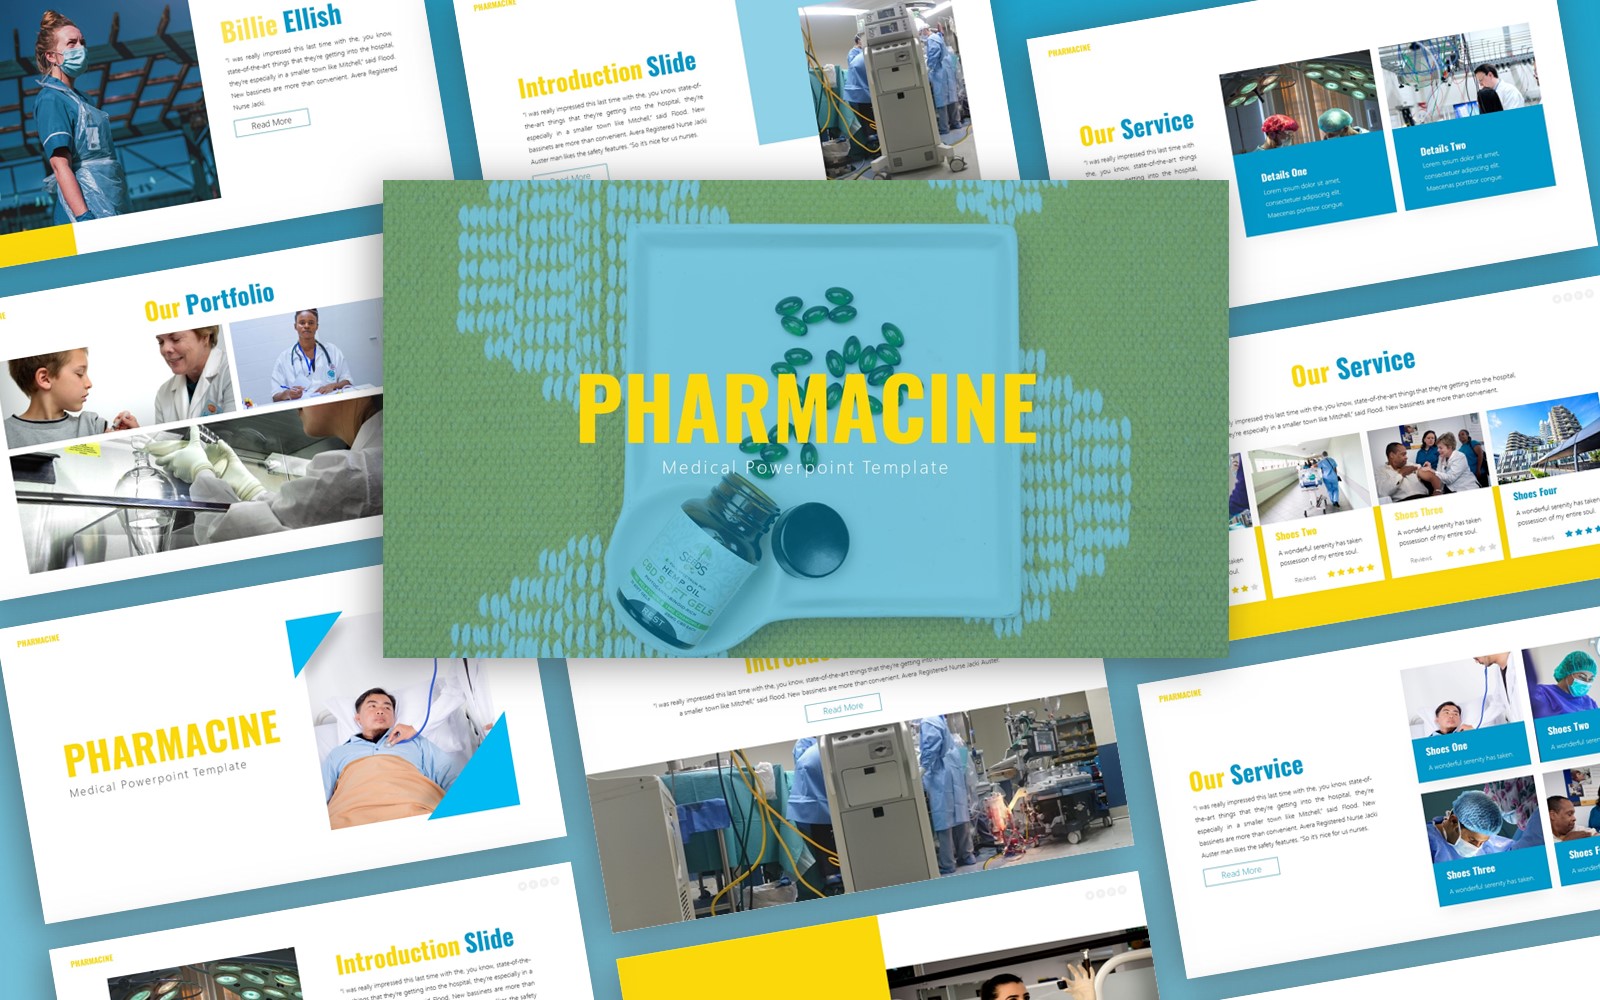 Pharmacine - Medical PowerPoint Template